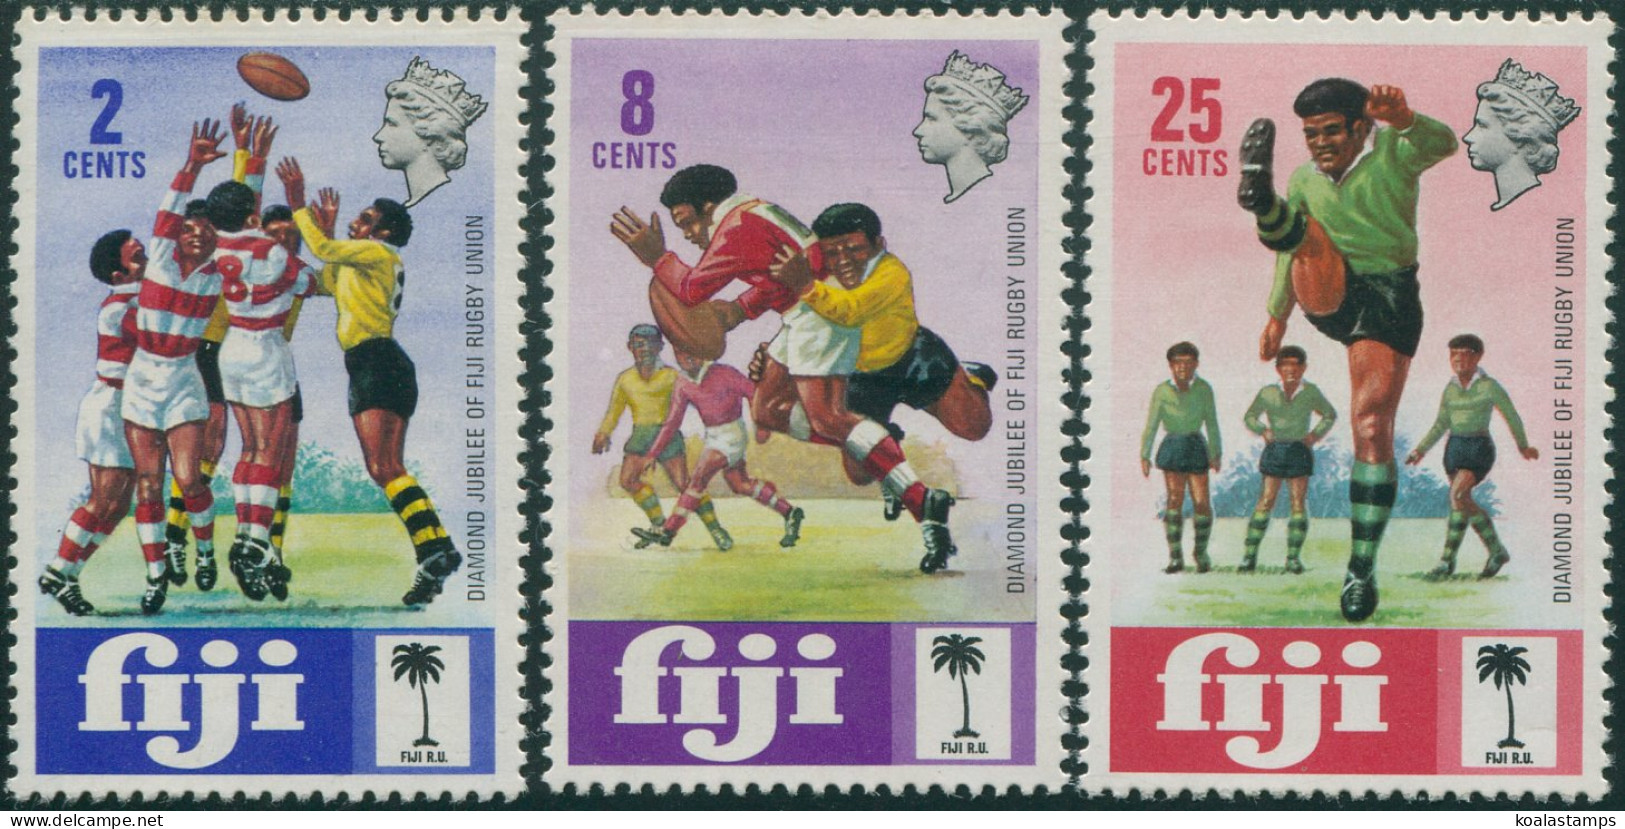 Fiji 1973 SG478-480 Rugby Union Set MNH - Fiji (1970-...)